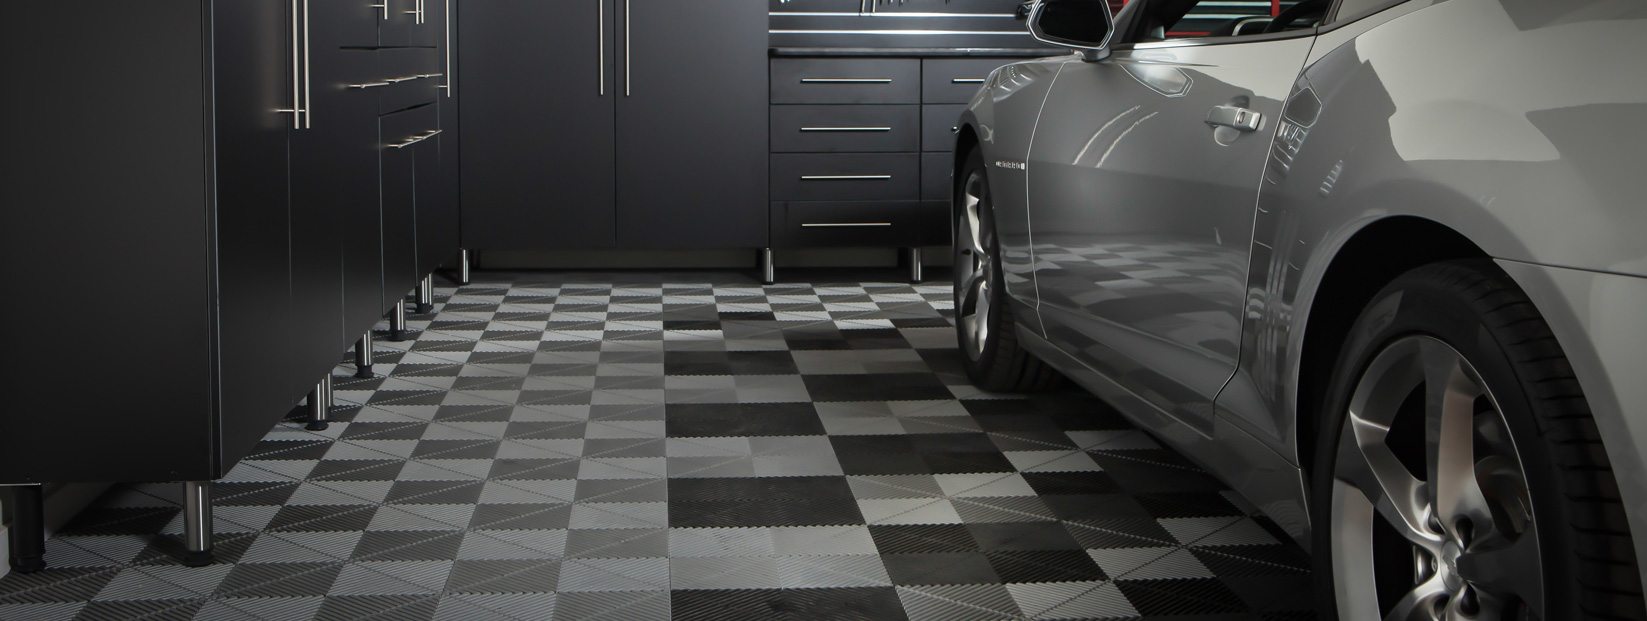 Garage Floor Tiles Cookeville